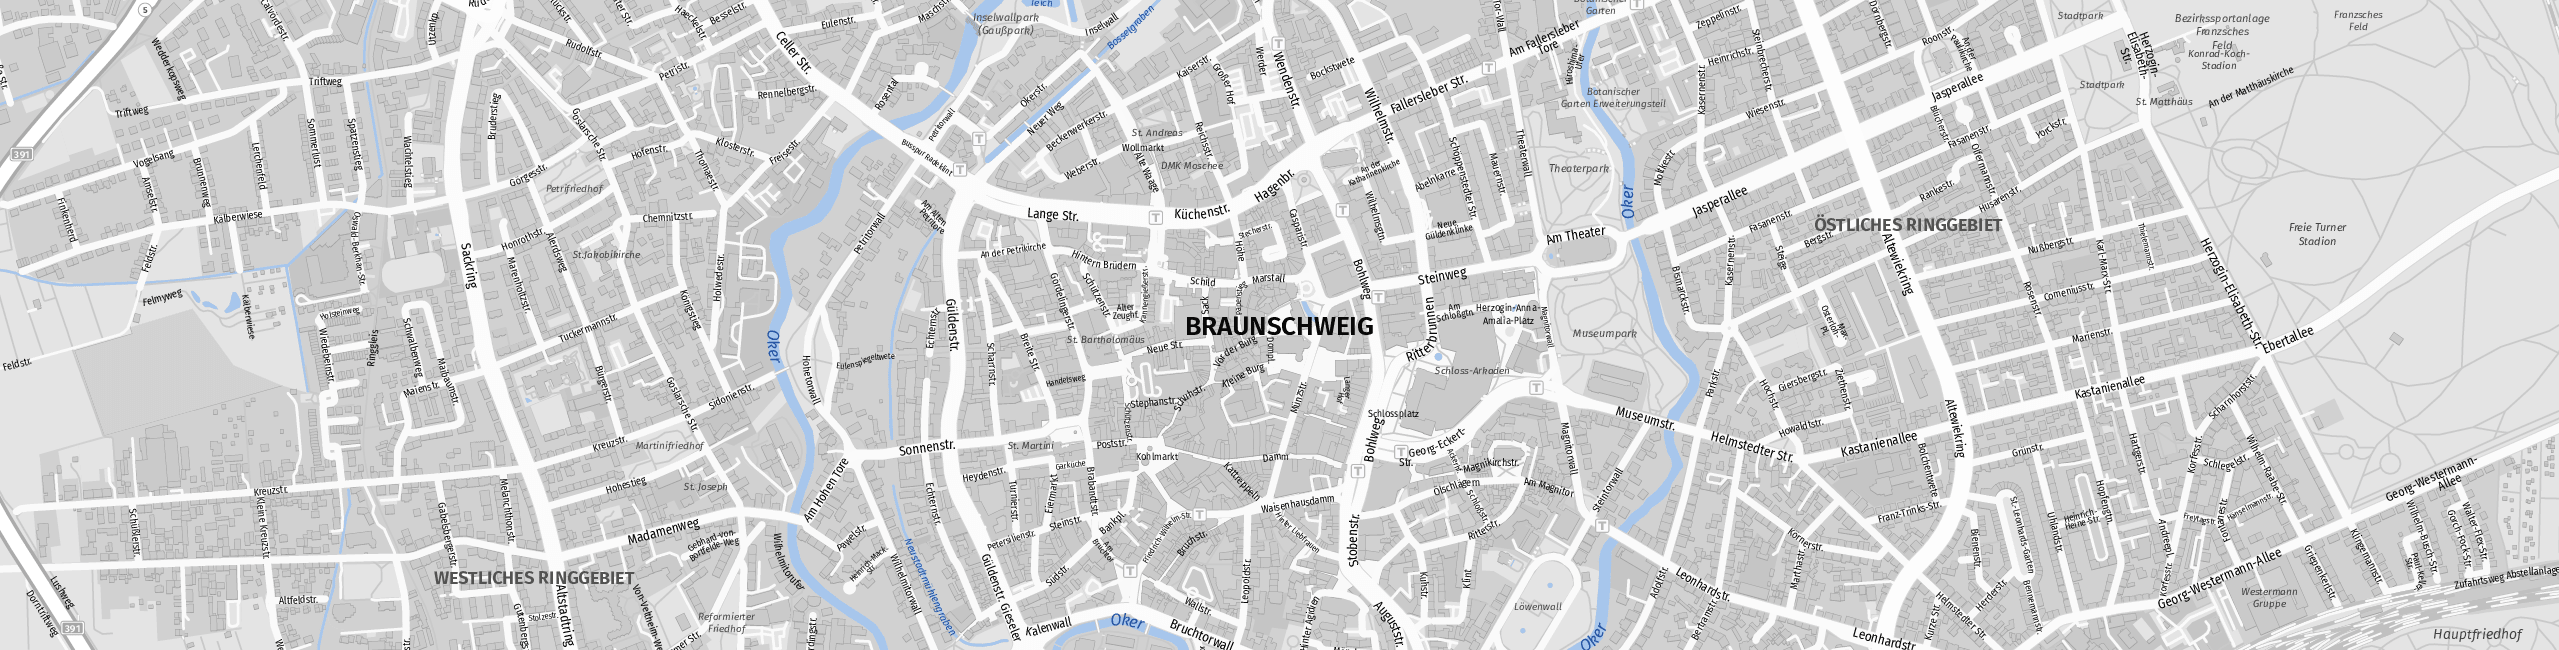 Stadtplan Braunschweig zum Downloaden.